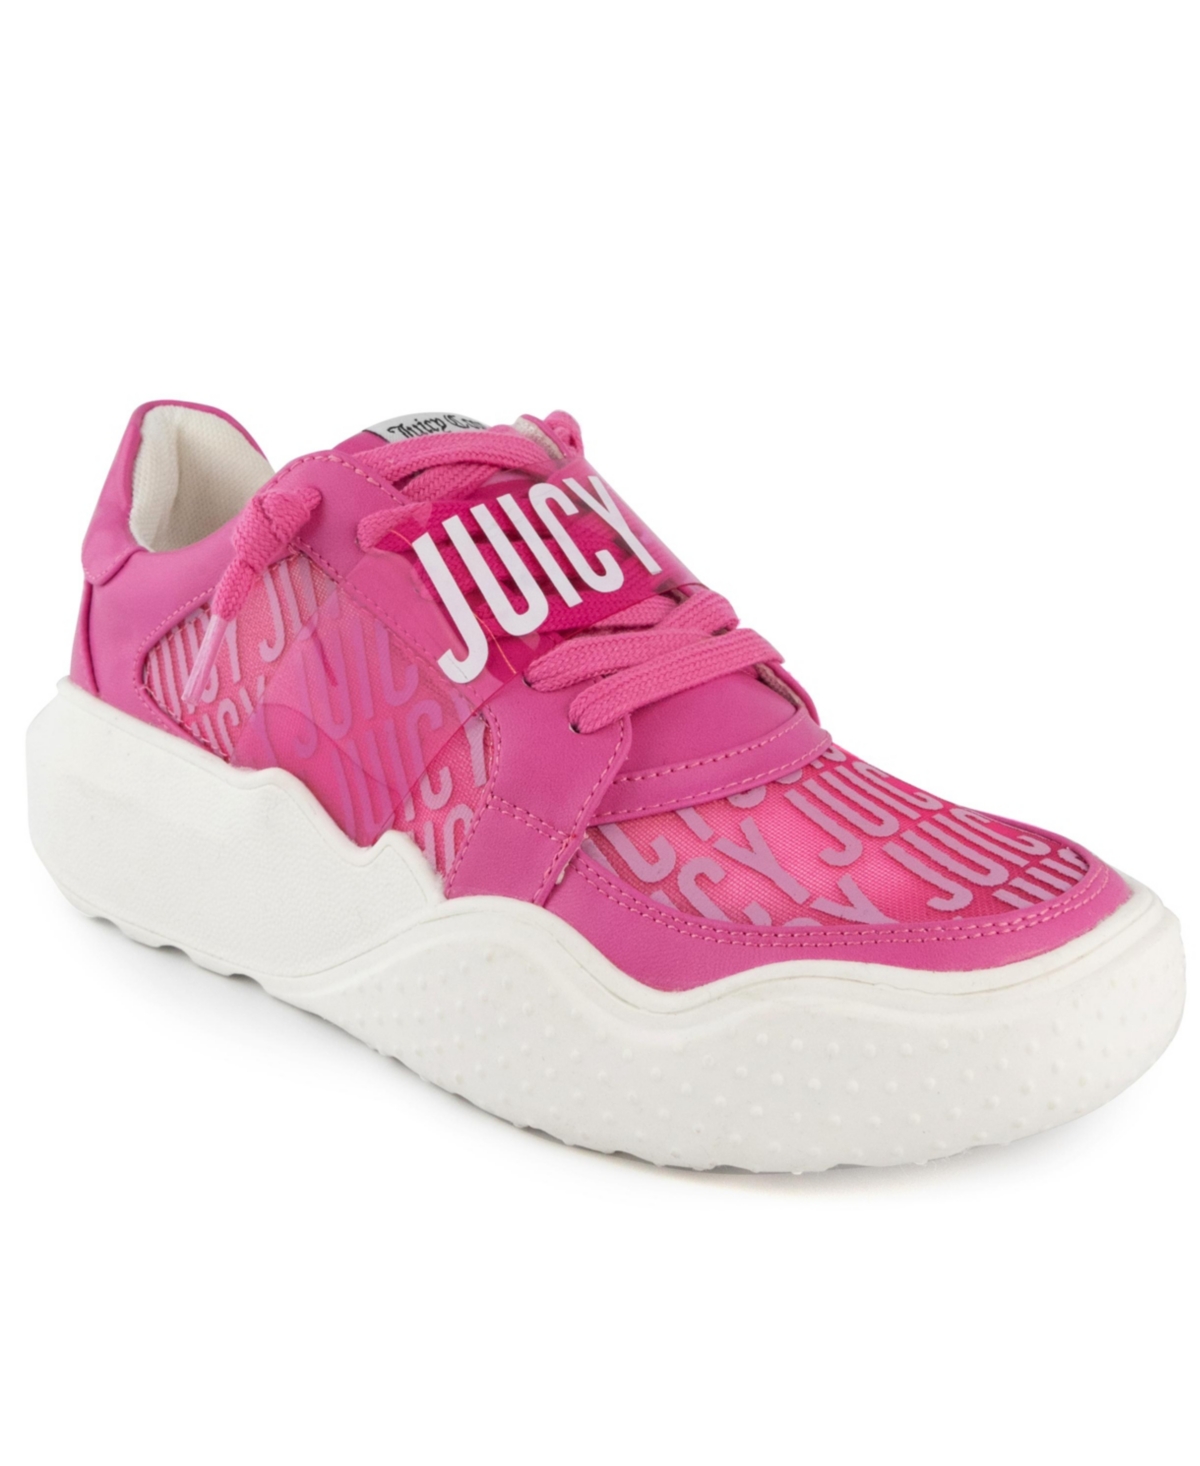 Women's Dyanna Sneakers - Bright Pink